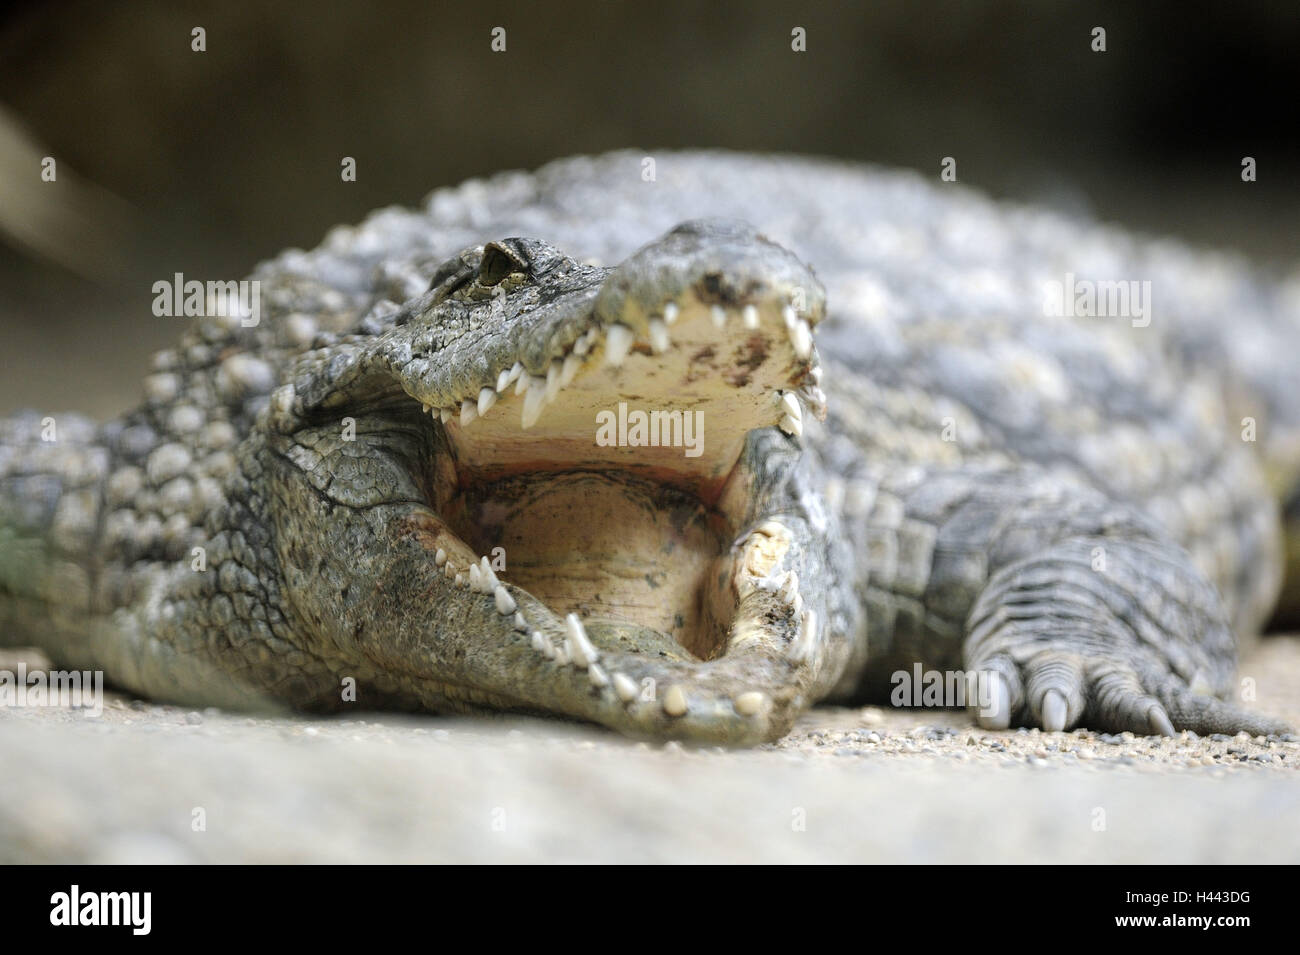 Nile crocodile, Crocodylus niloticus, mouth, openly, blur, animal, zoo animal, zoo, captive, reptile, Warmblüter, bite, cogs, crocodile, land vertebrate, dangerously, aggressively, Stock Photo